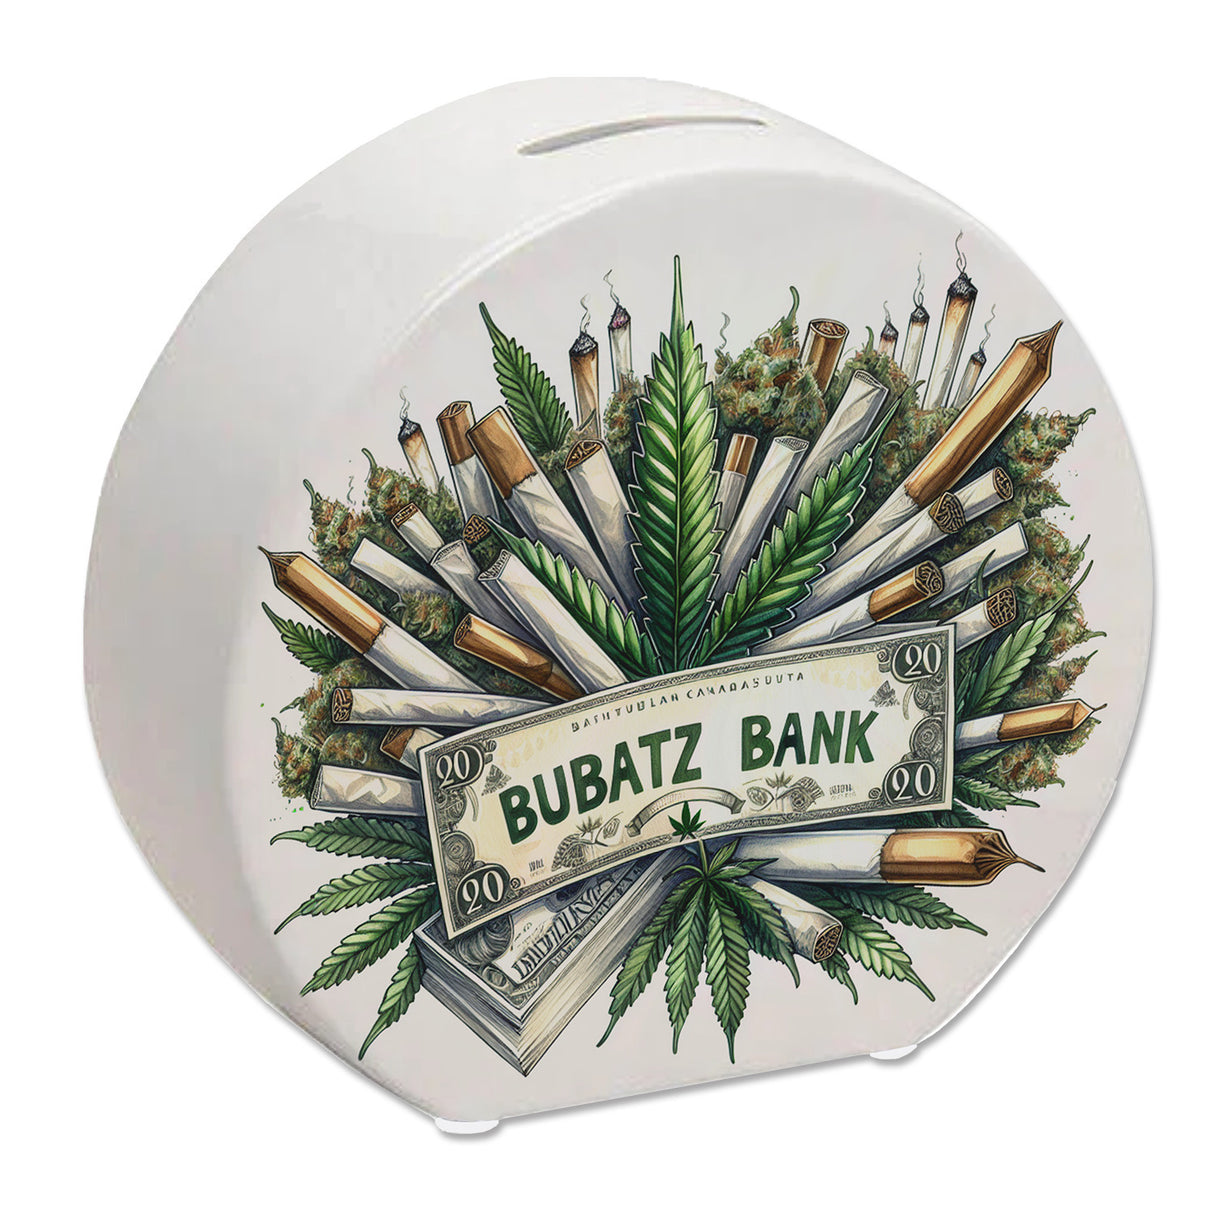 Marihuana Kiffer Spardose mit Spruch Bubatz Bank